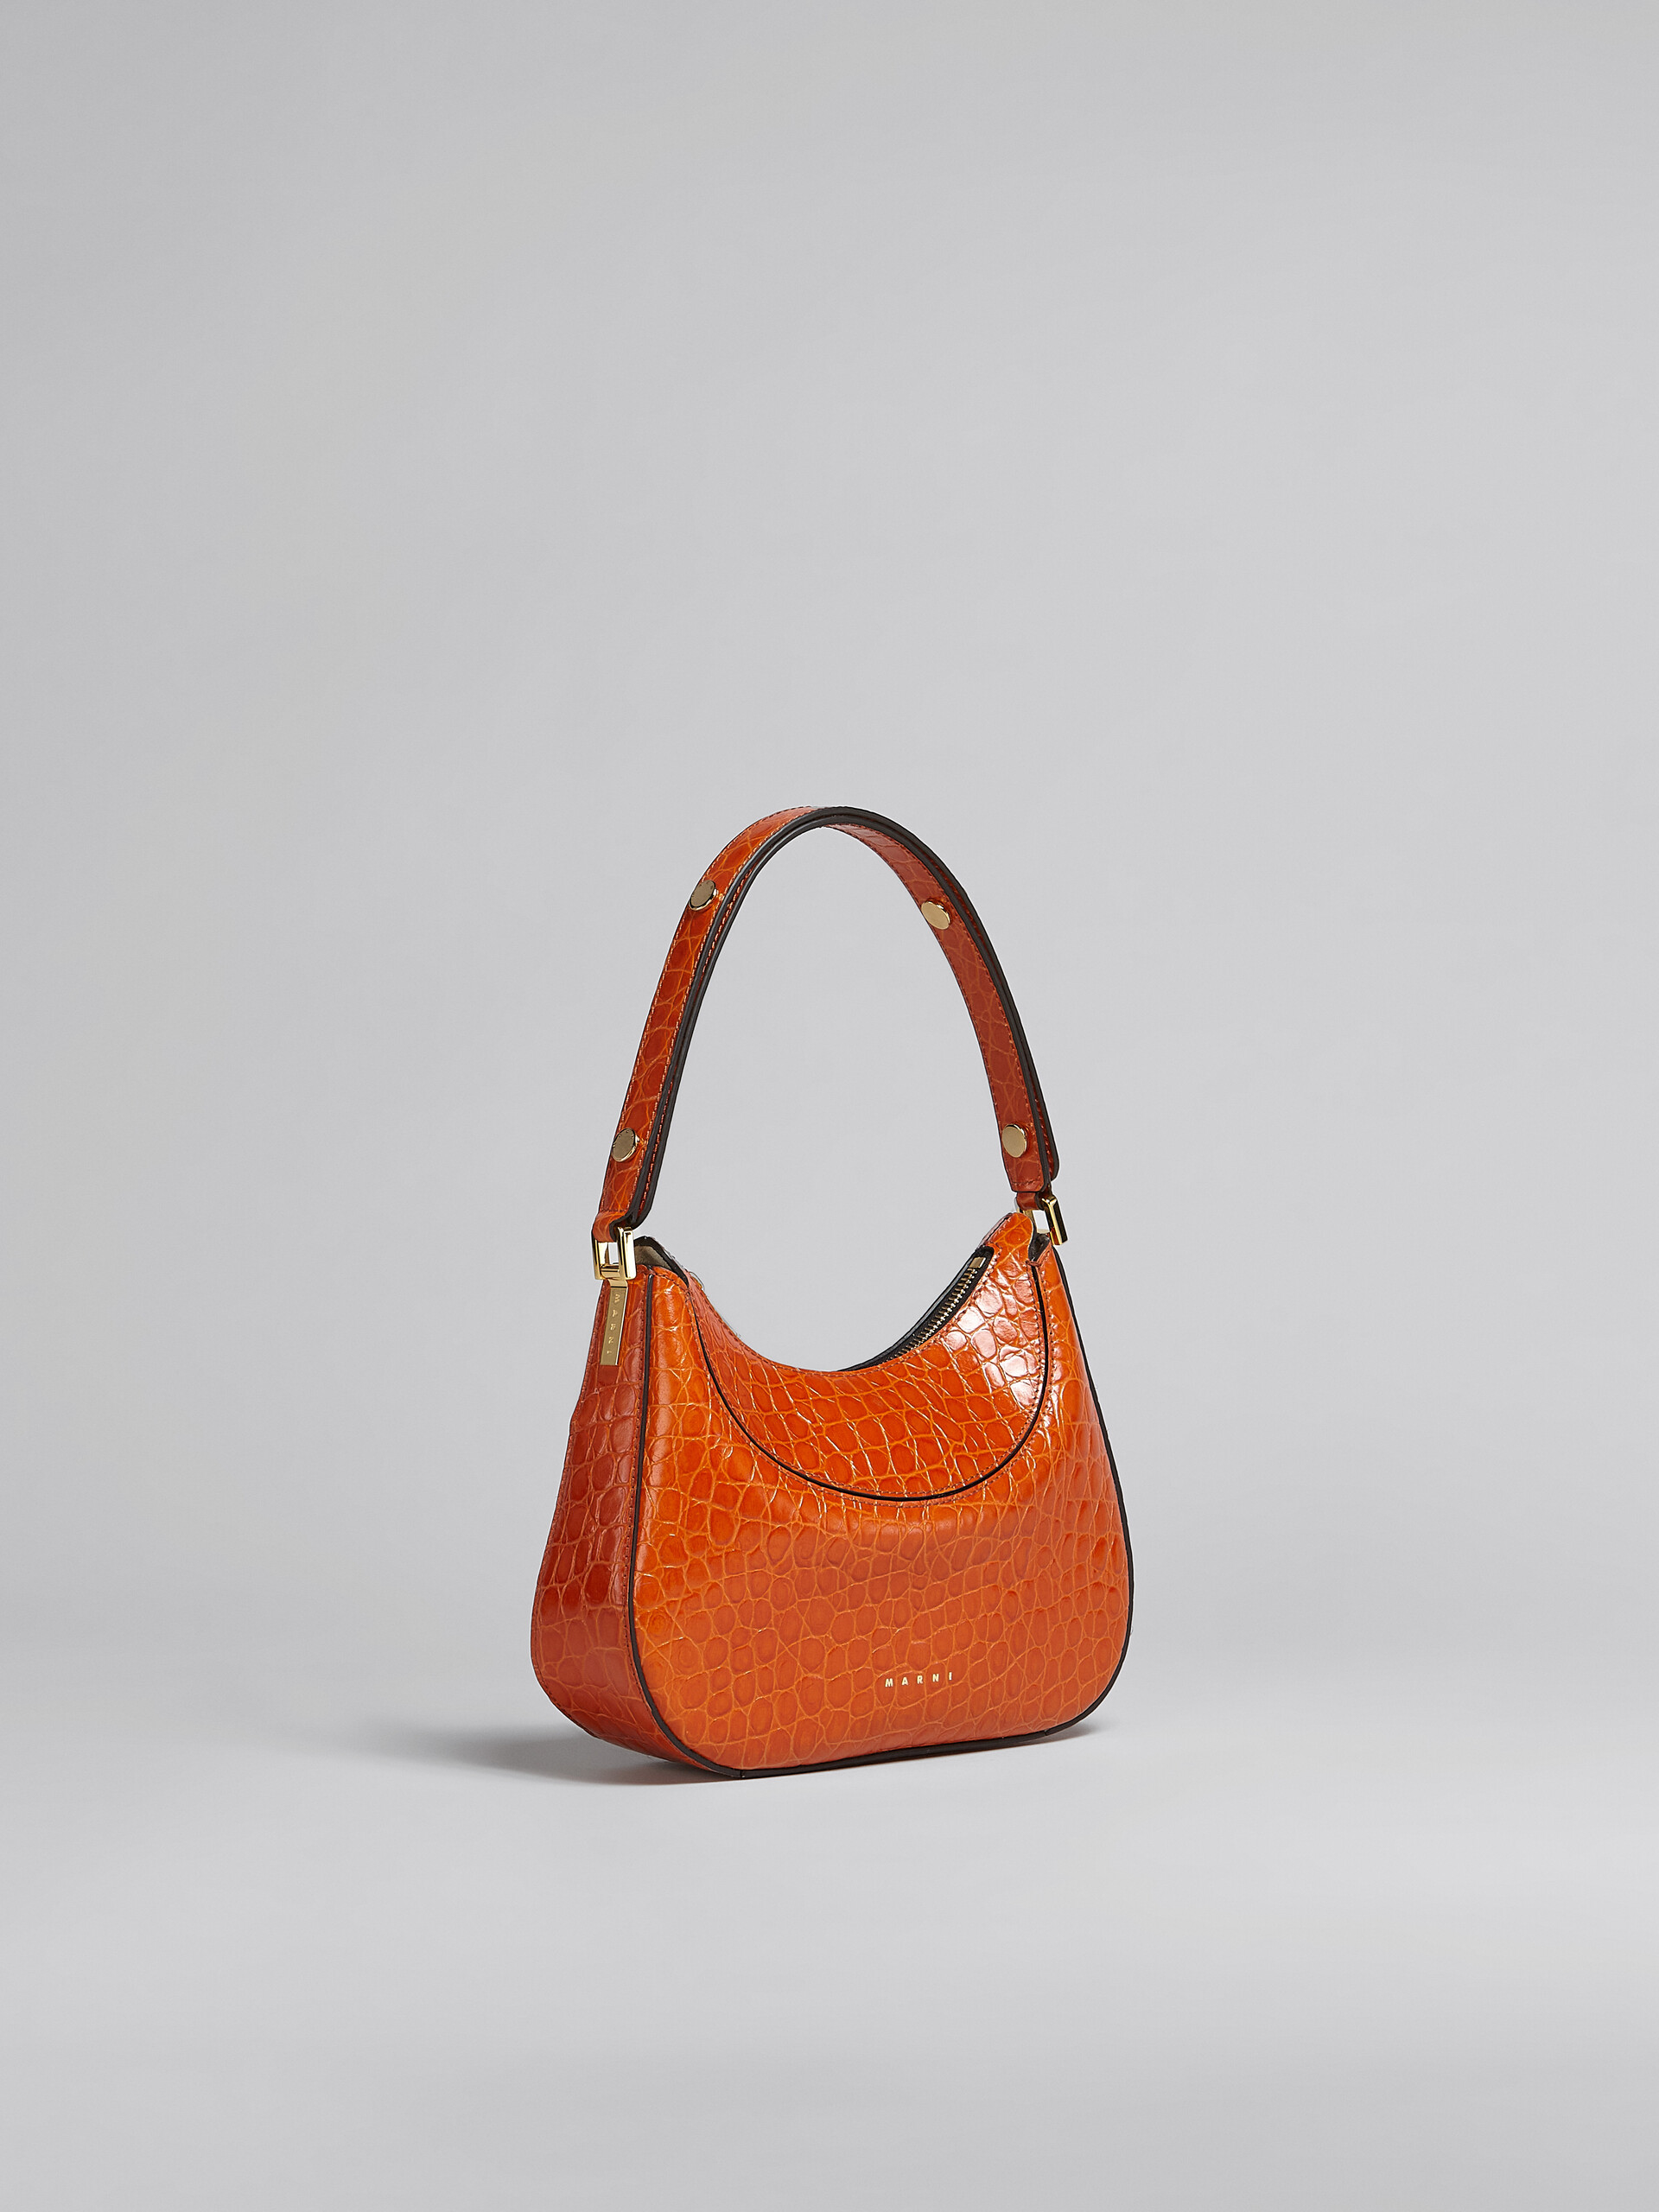 Milano Mini Bag in orange croco print leather - Handbags - Image 6